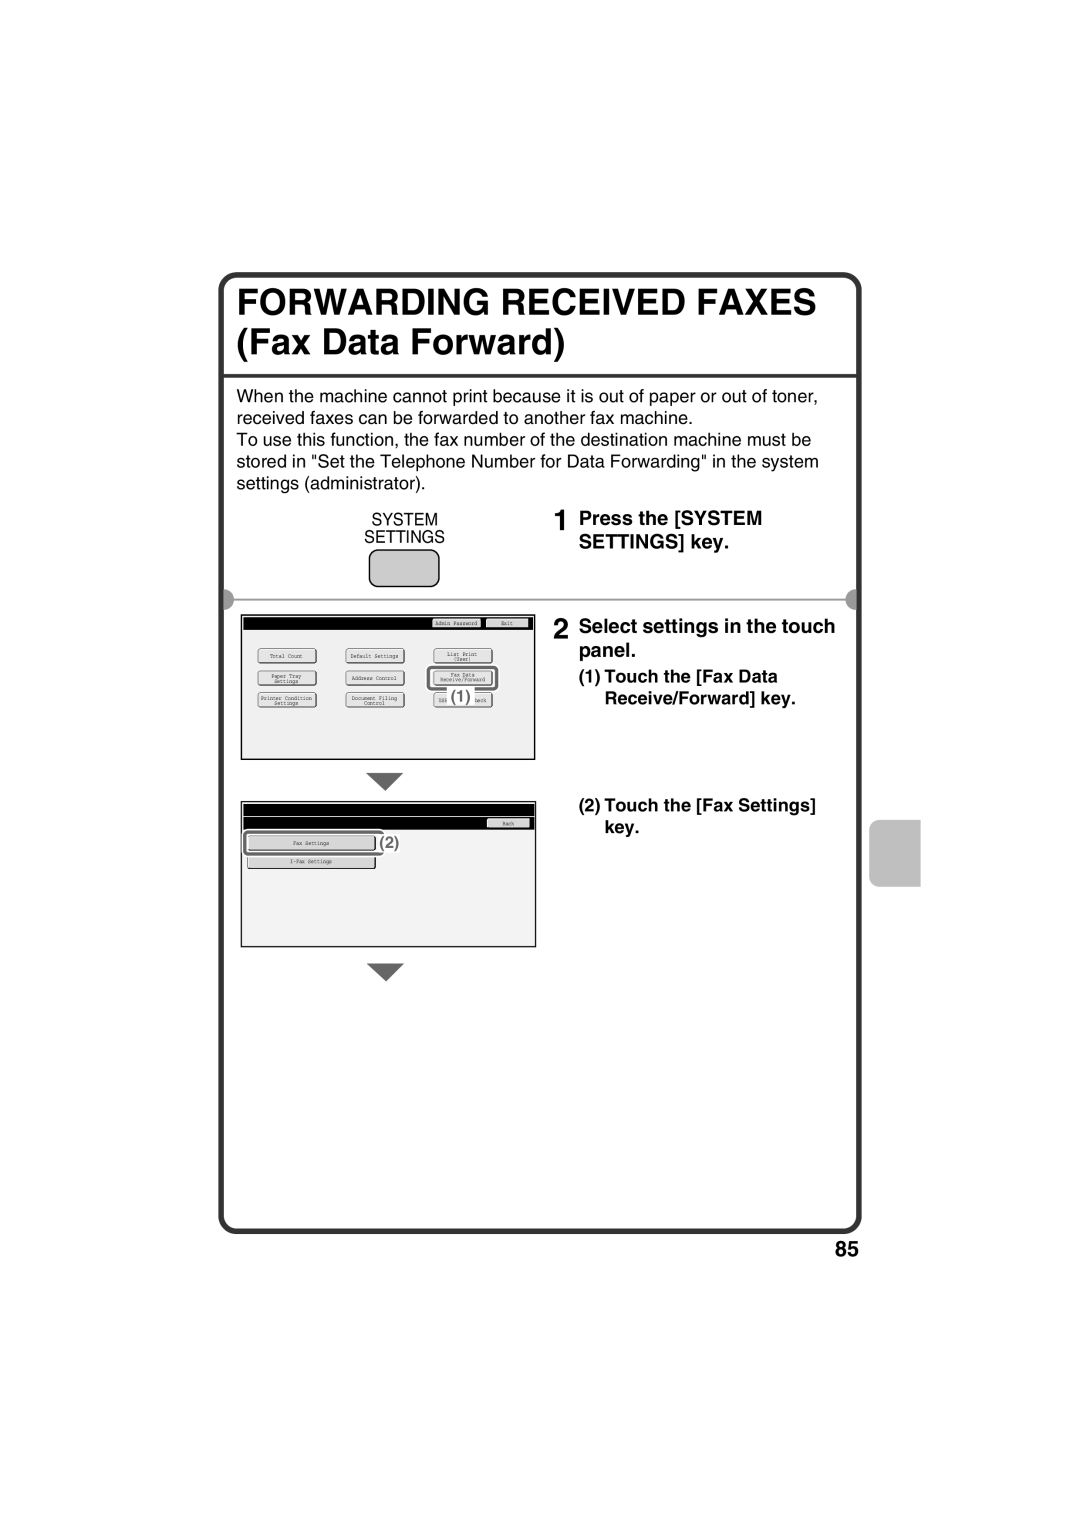 Sharp MX-C381, MX-C311 FORWARDING RECEIVED FAXES Fax Data Forward, Touch the Fax Data Receive/Forward key, SETTINGS key 